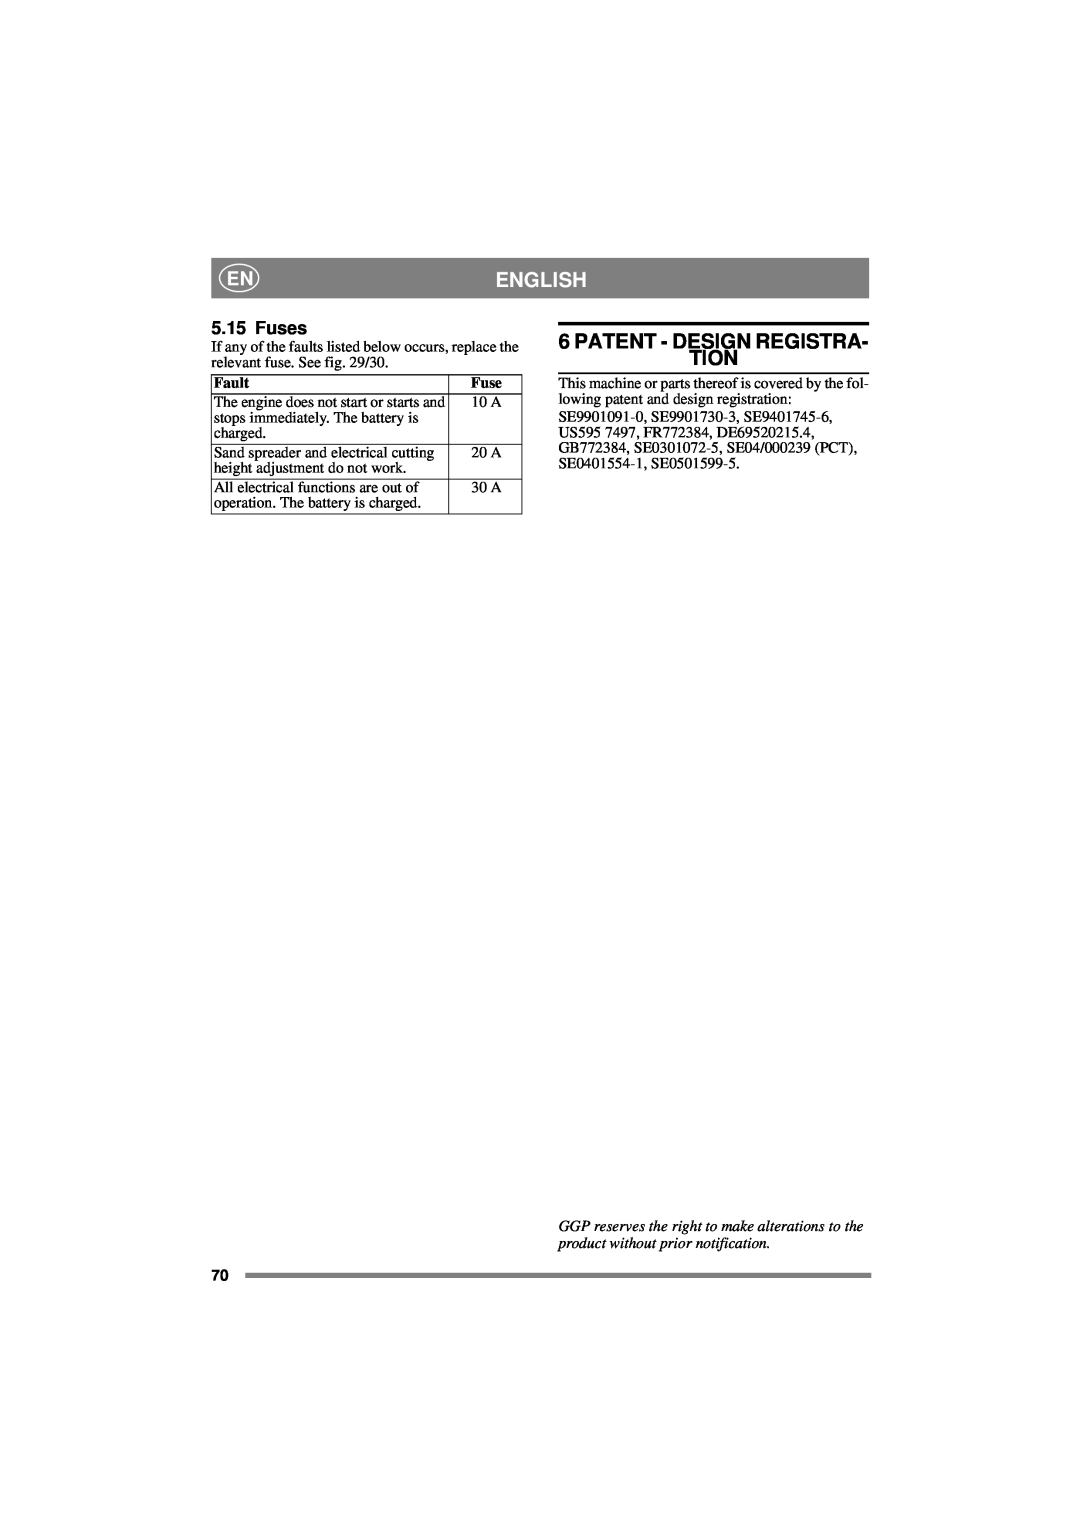 Stiga DIESEL 4WD manual Patent - Design Registra Tion, Fuses, Enenglish 